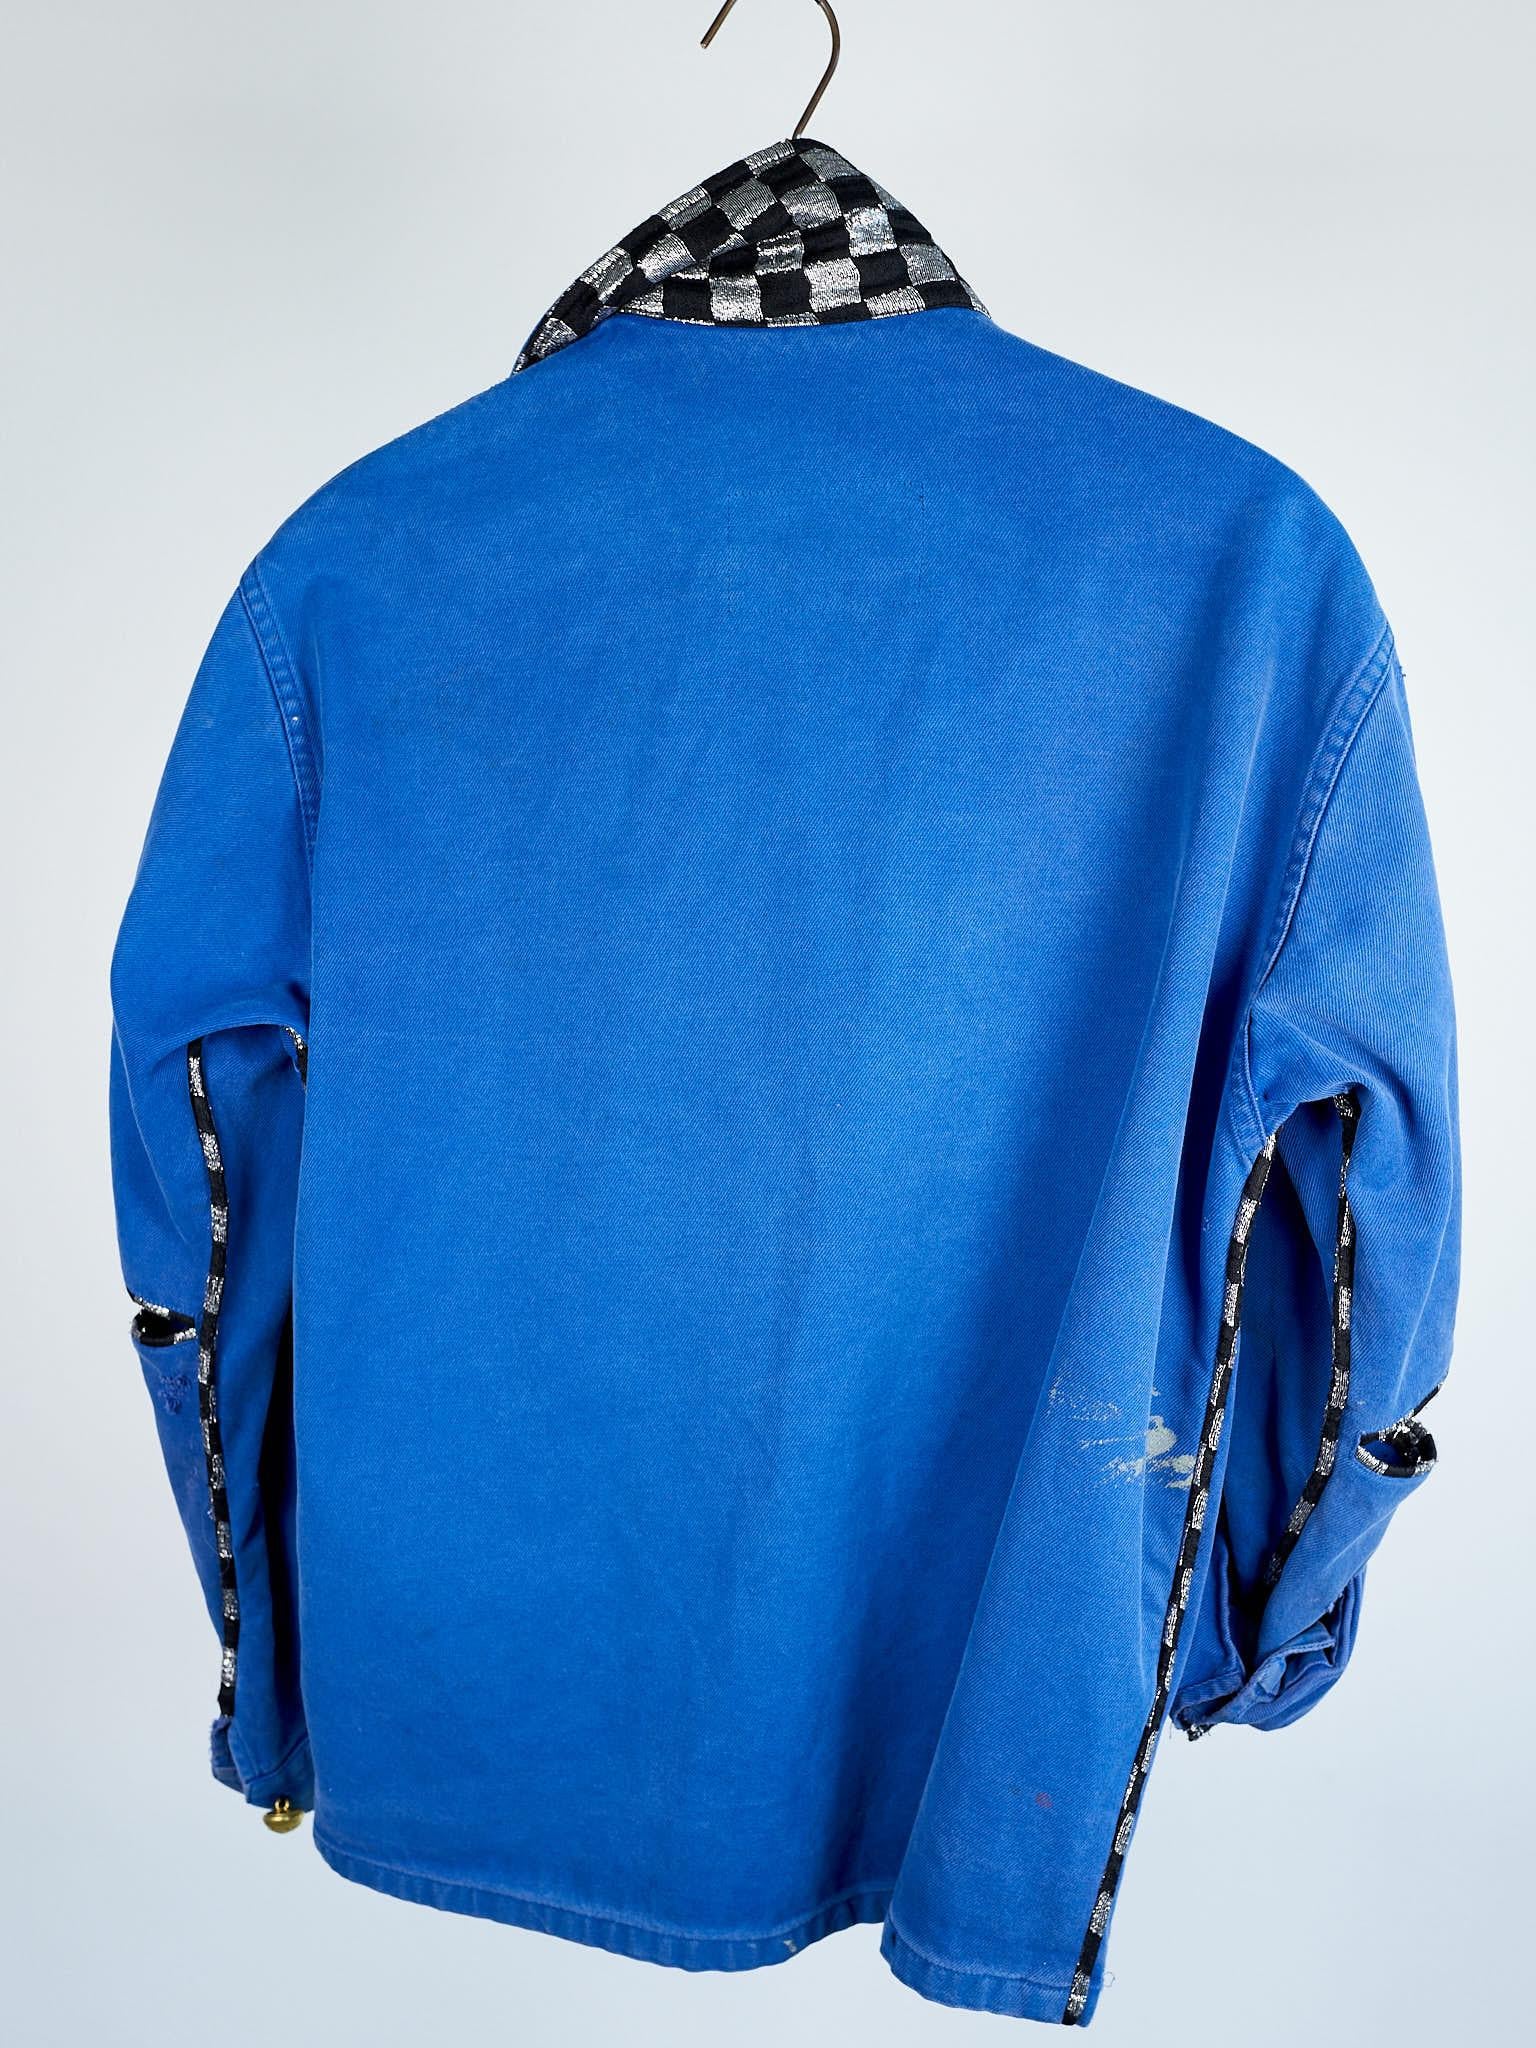 Designer Jacket Distressed Original French Blue Work Wear J Dauphin Small 4